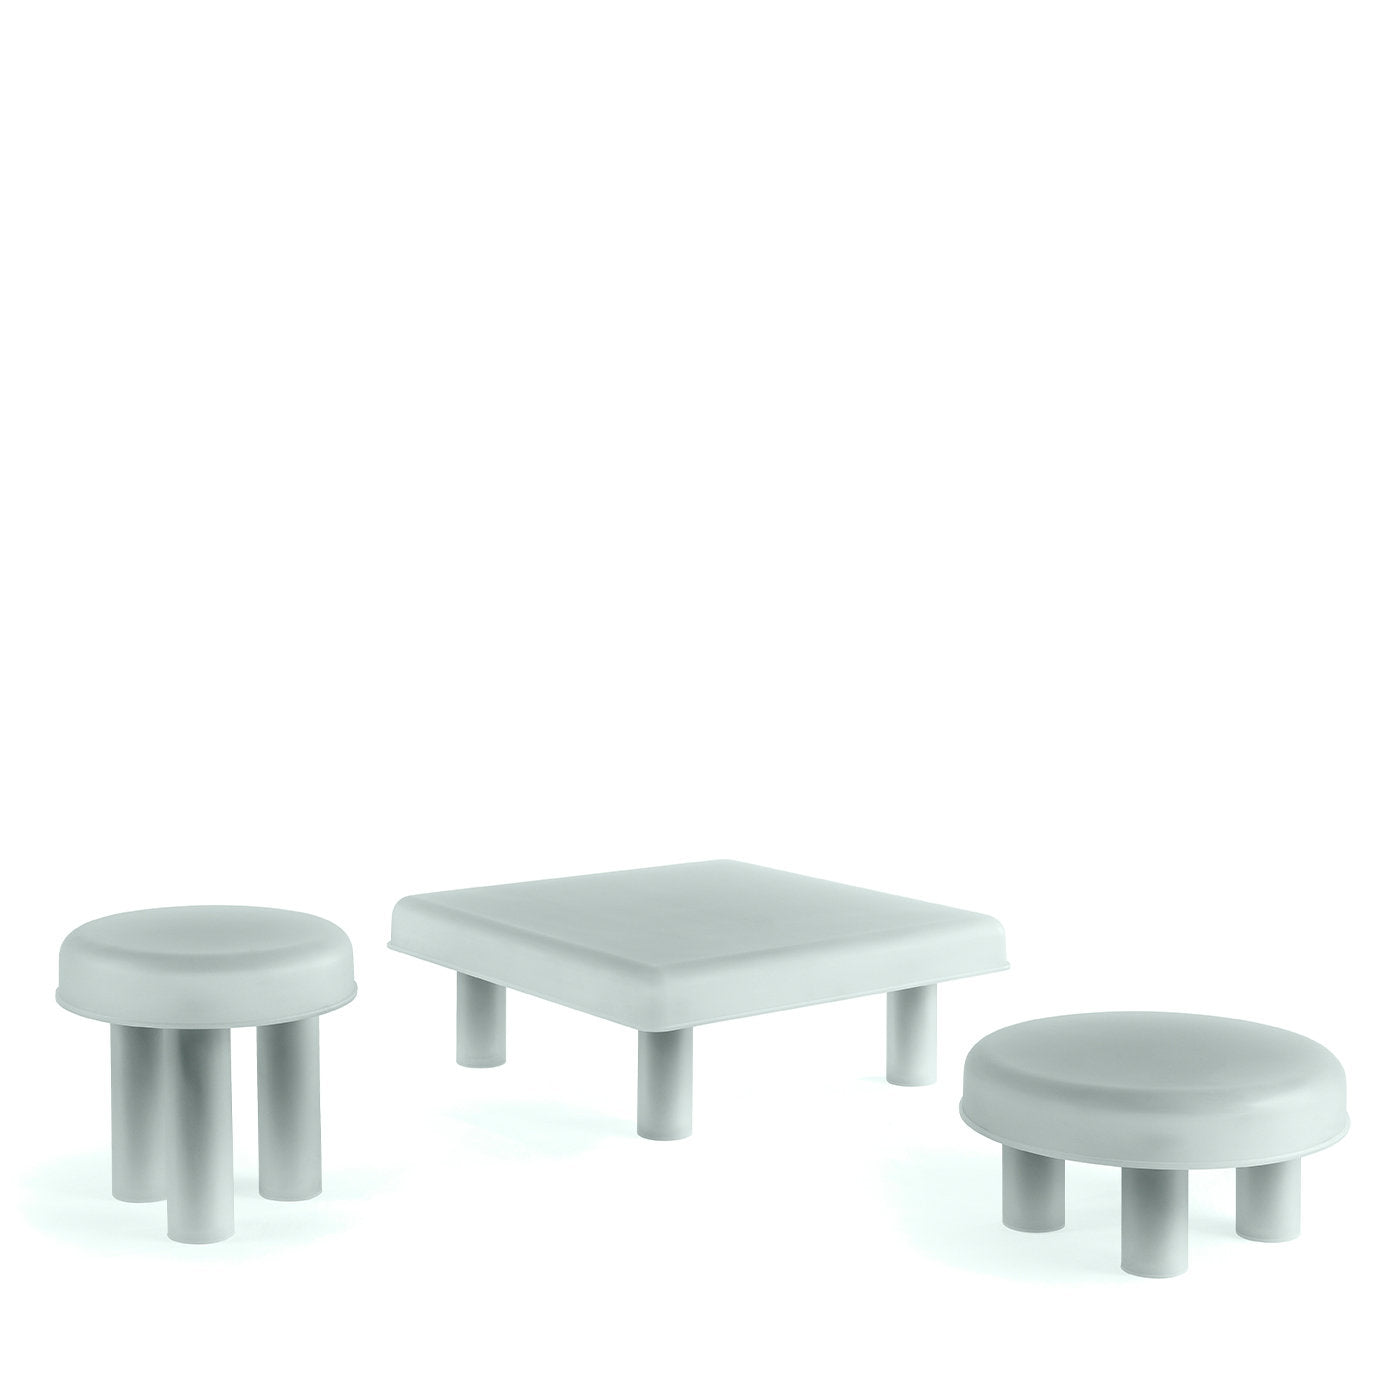 SOPOVRIA VA SIDE TABLE - Design by Sovrappensiero - Alternative Ansicht 1